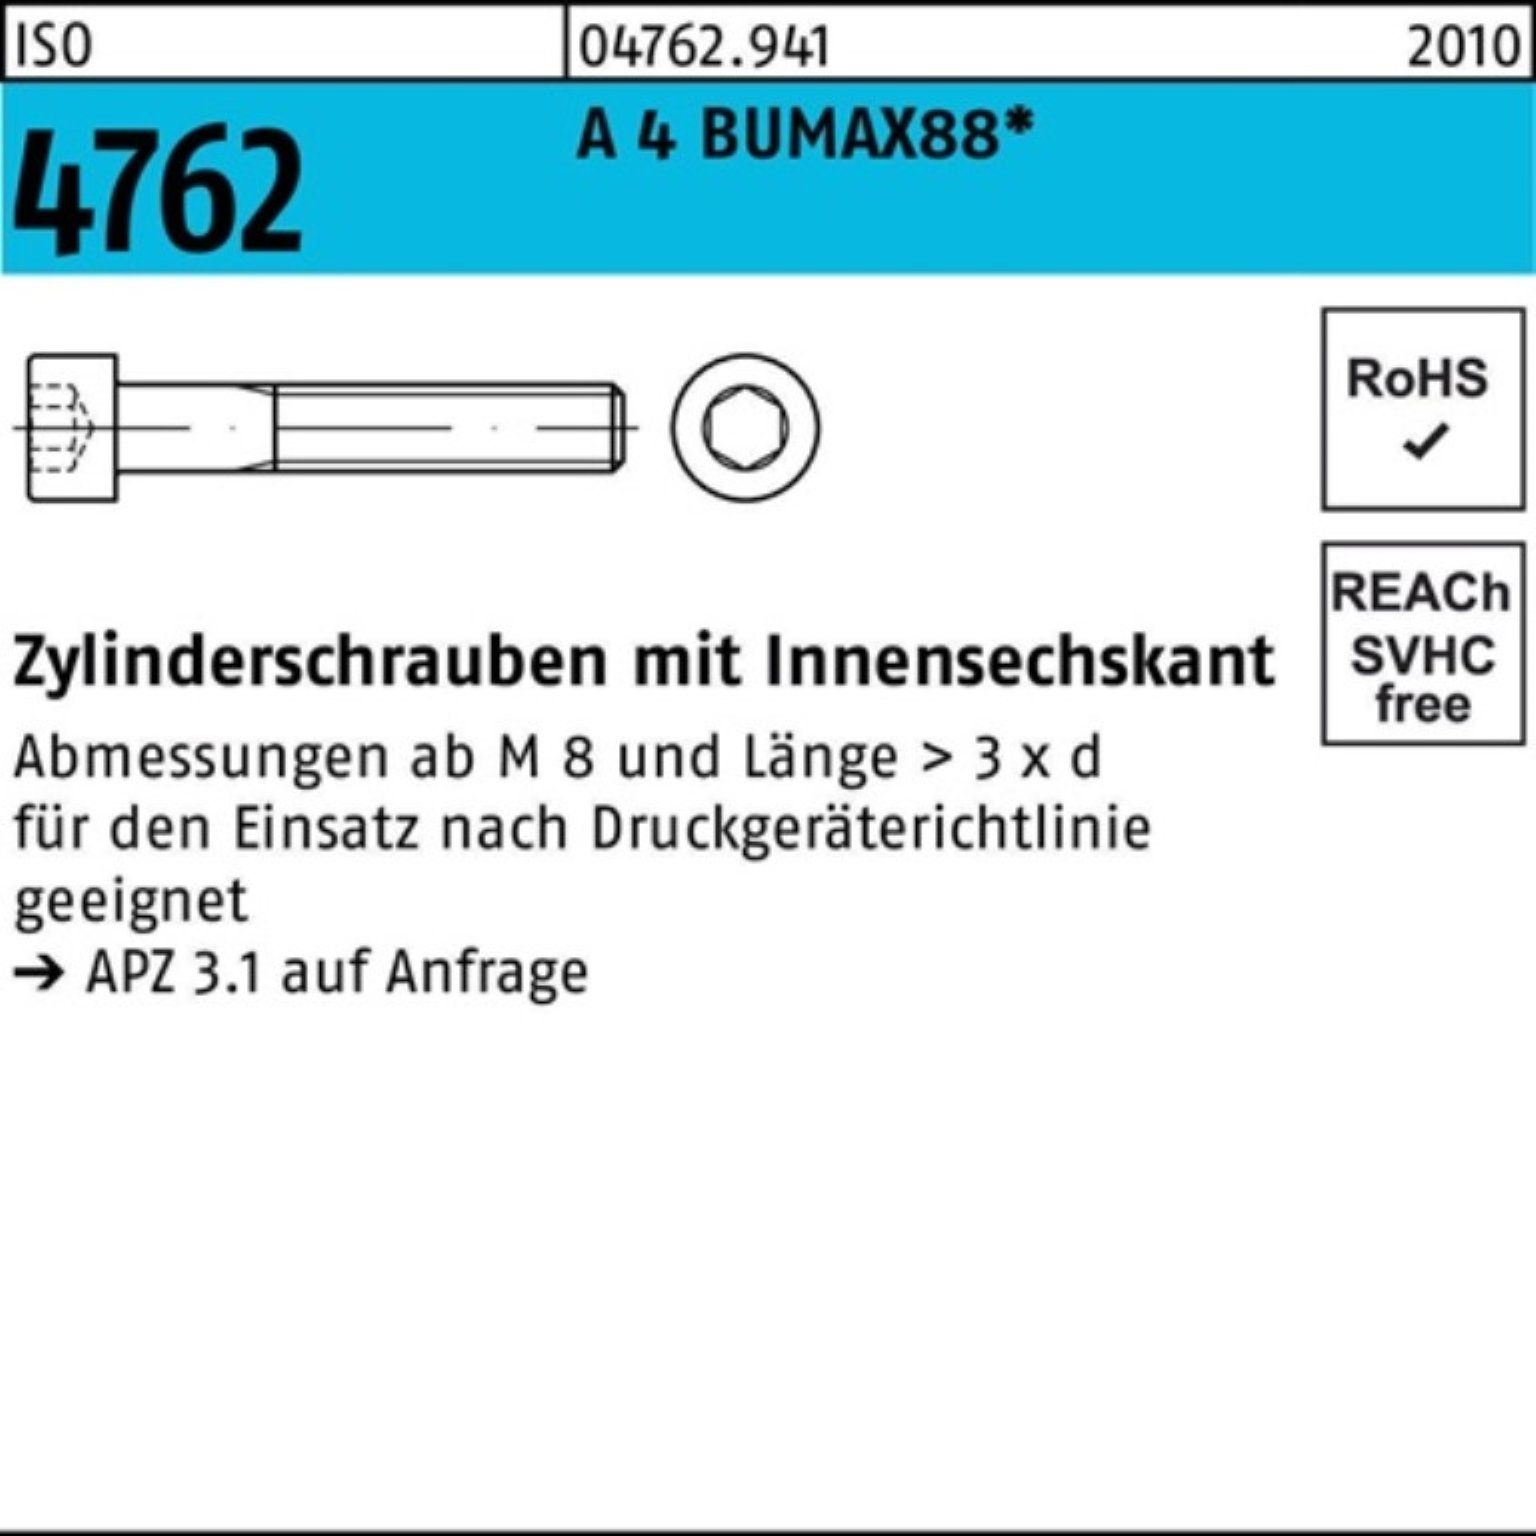 Pack Zylinderschraube BUMAX88 ISO M5x Innen-6kt A 30 100er Zylinderschraube Bufab 4762 100 4